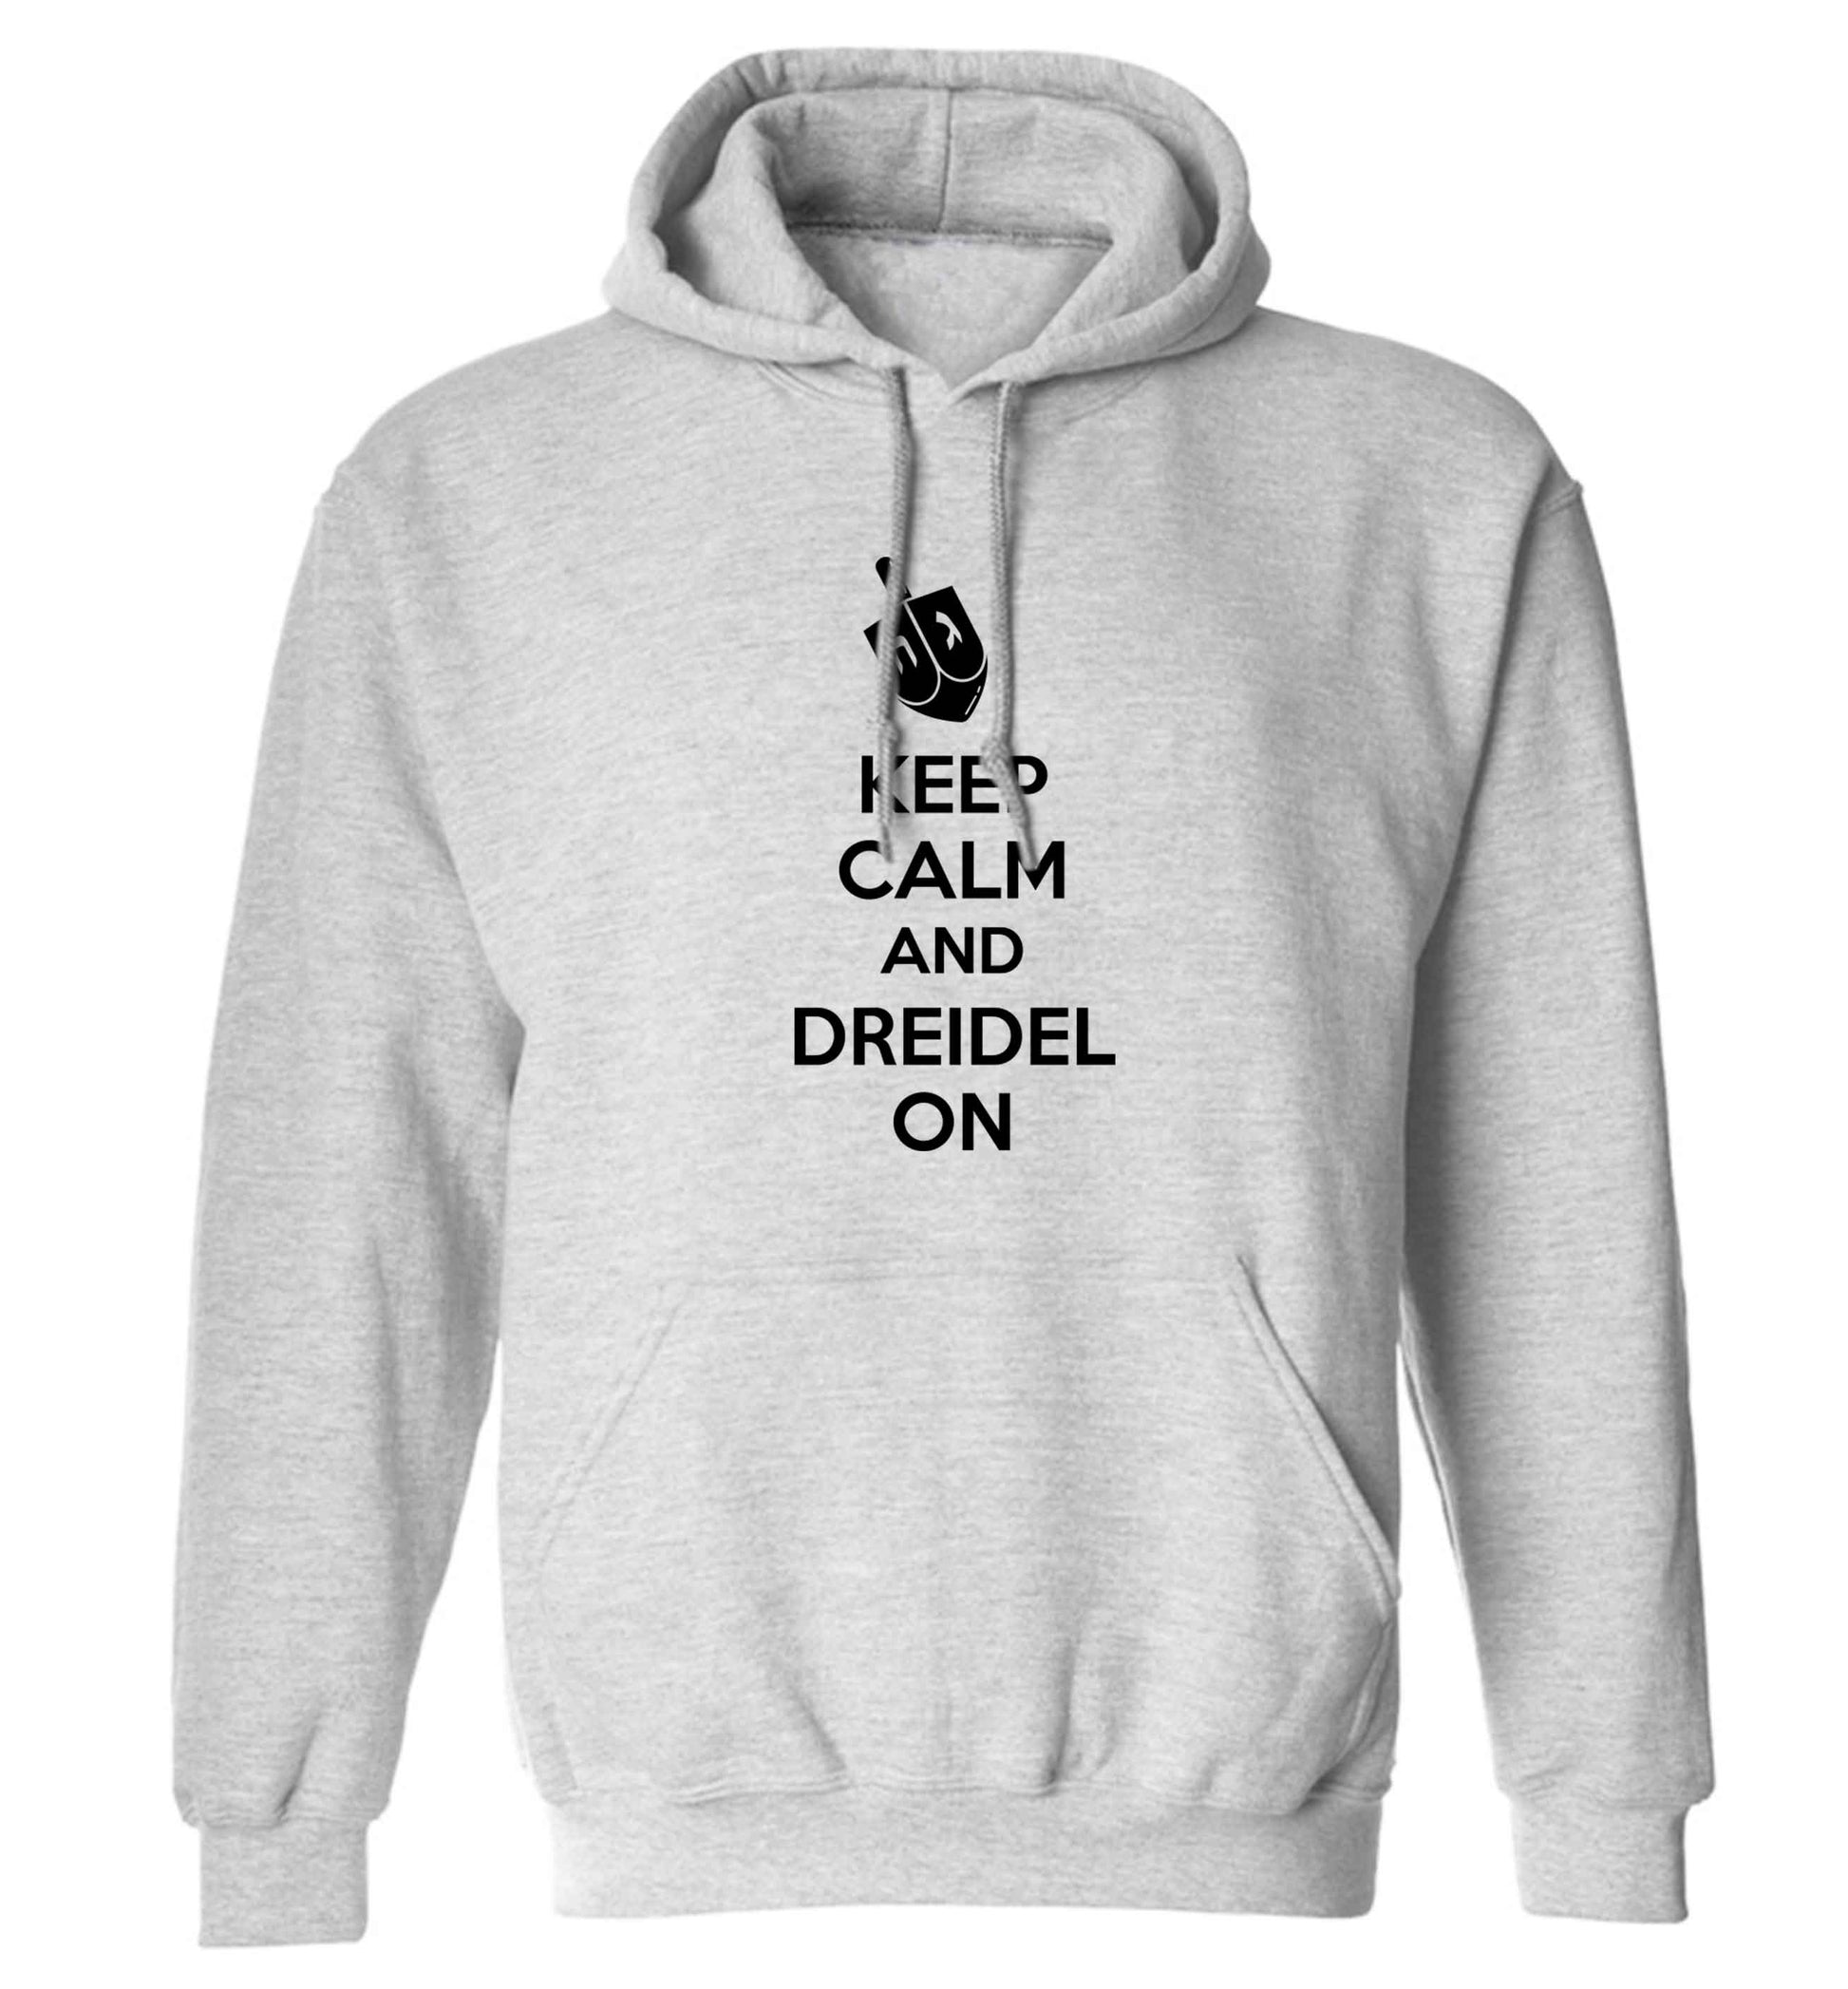 Keep calm and dreidel on adults unisex grey hoodie 2XL